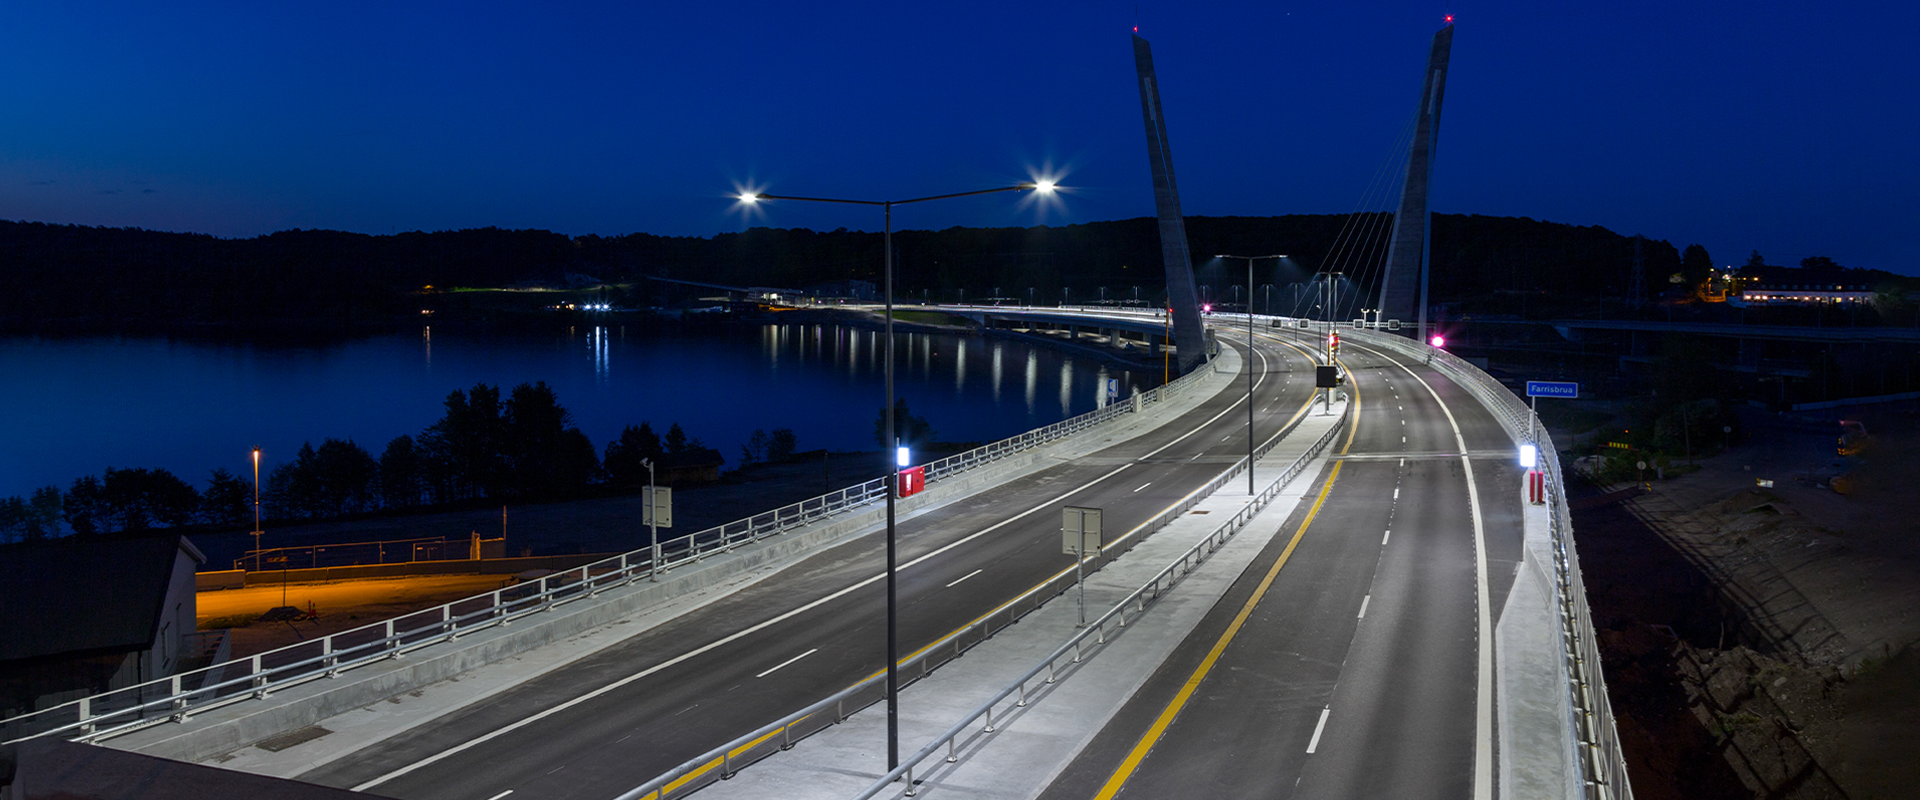 Illuminazione LED del ponte di Larvik